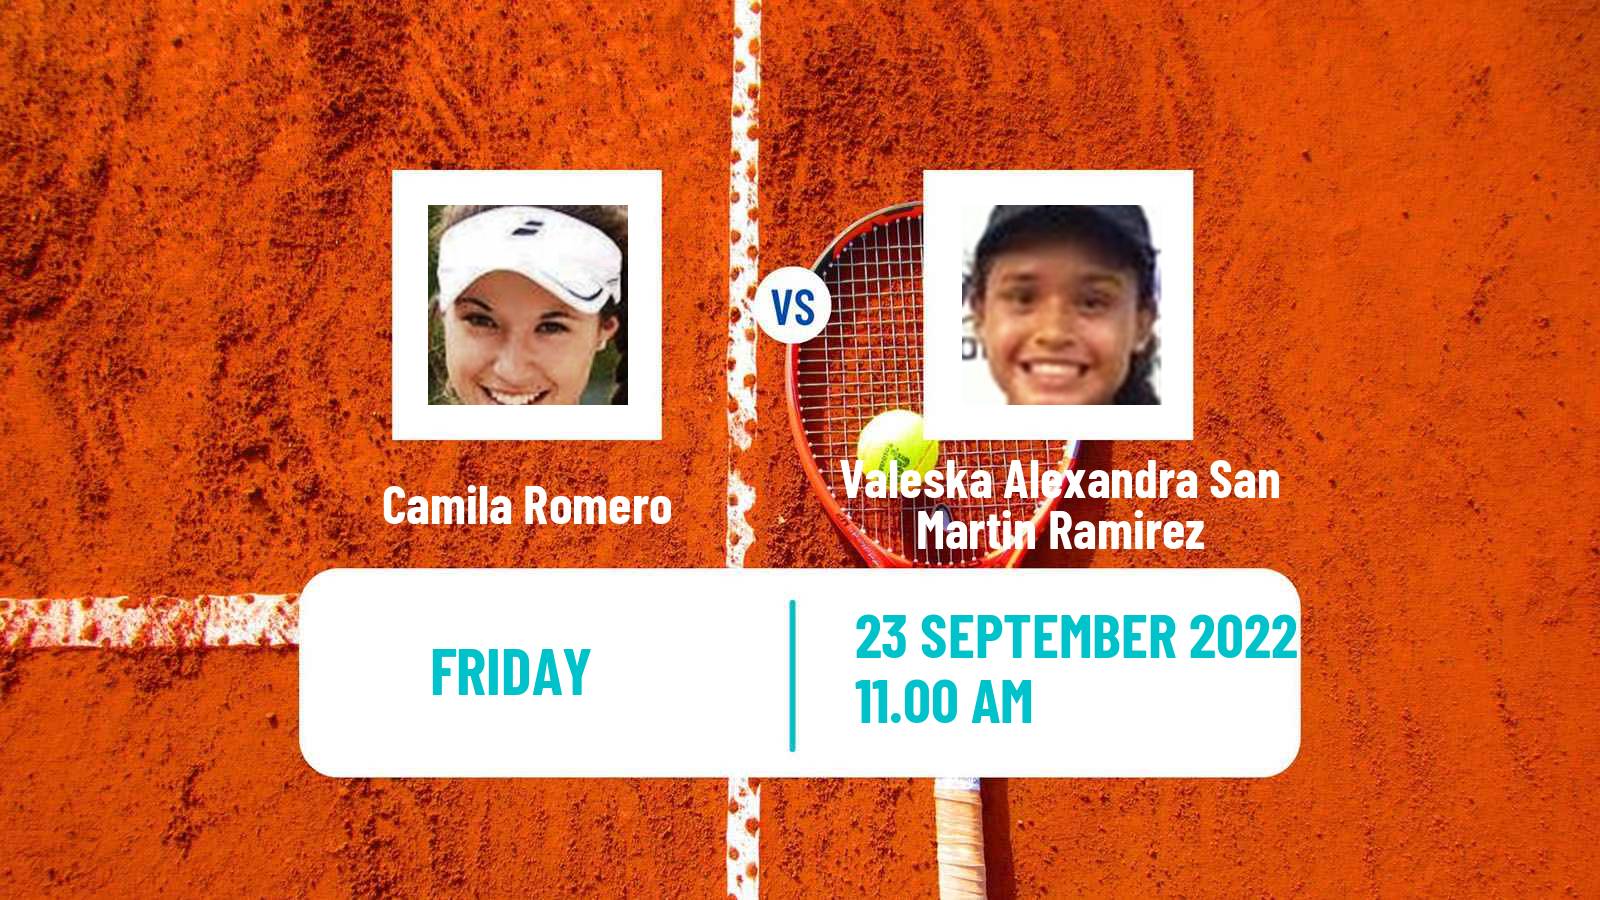 Tennis ITF Tournaments Camila Romero - Valeska Alexandra San Martin Ramirez